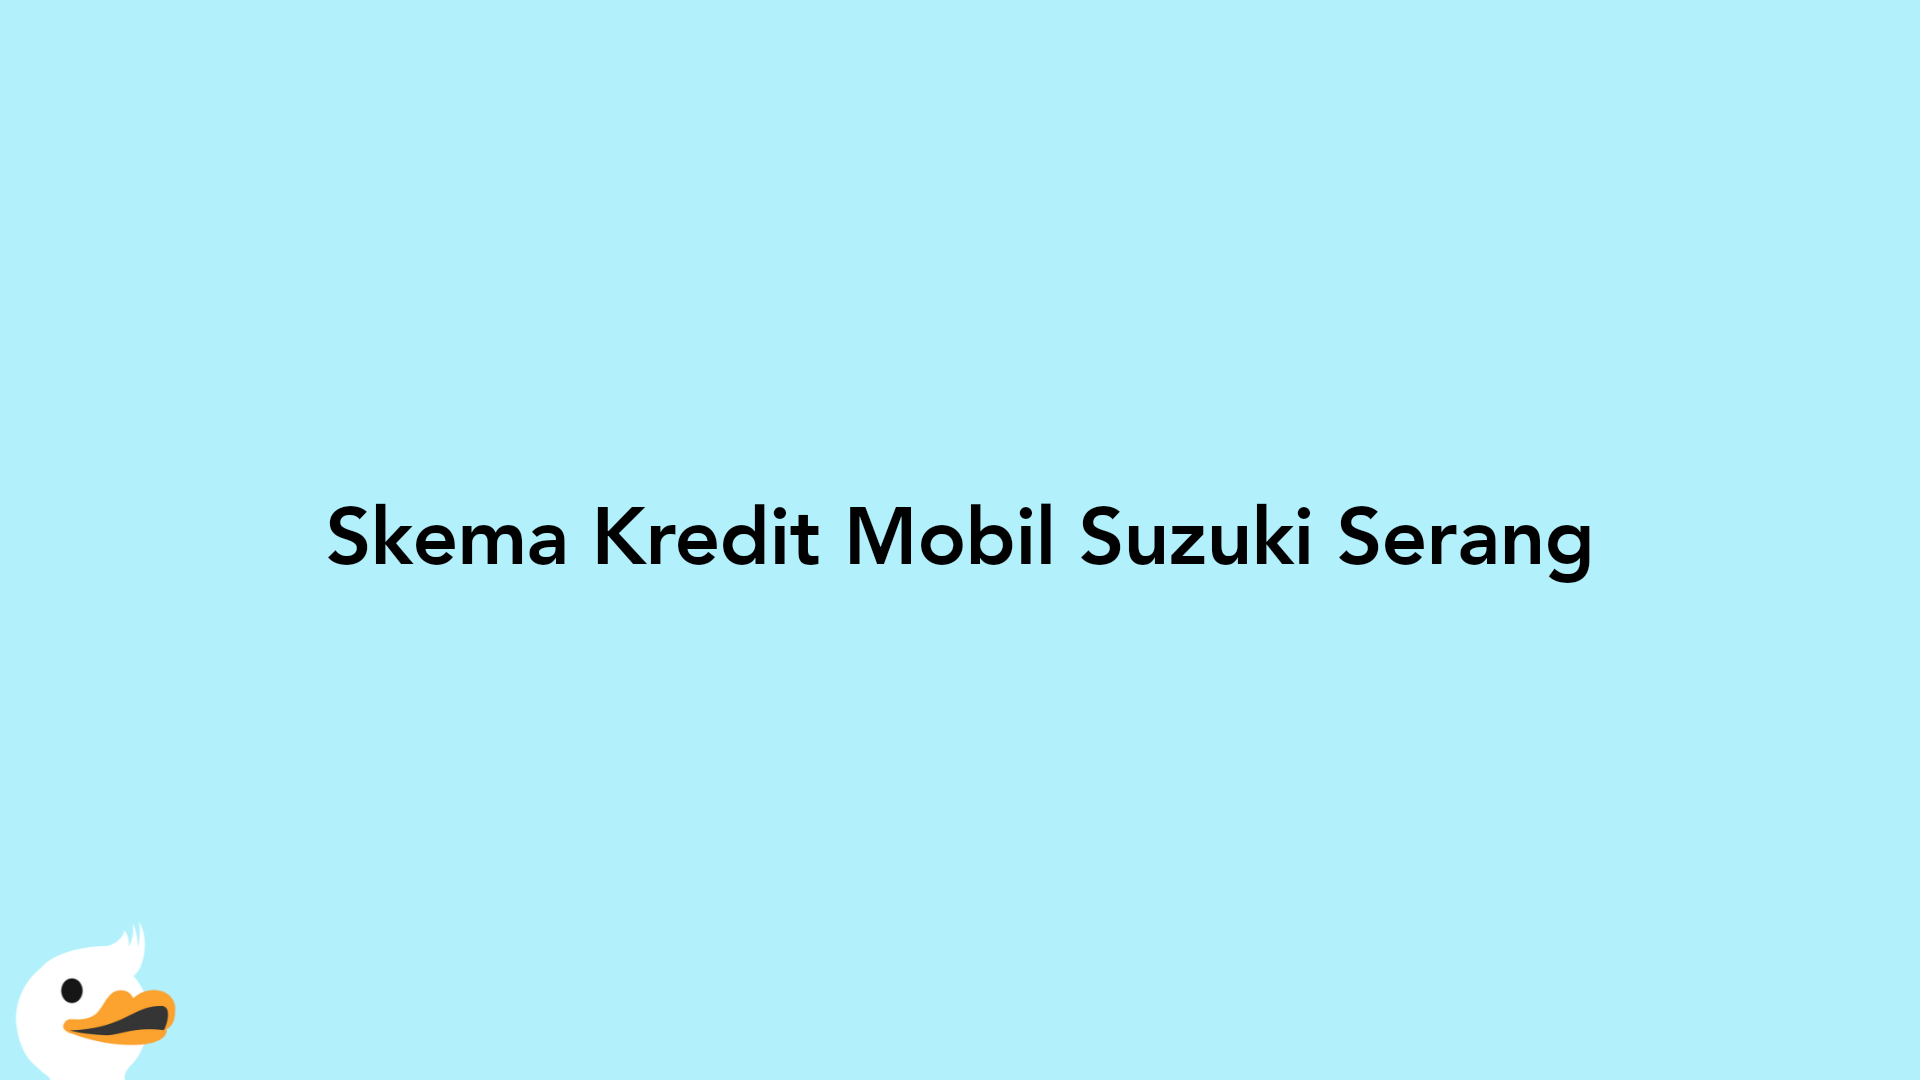 Skema Kredit Mobil Suzuki Serang